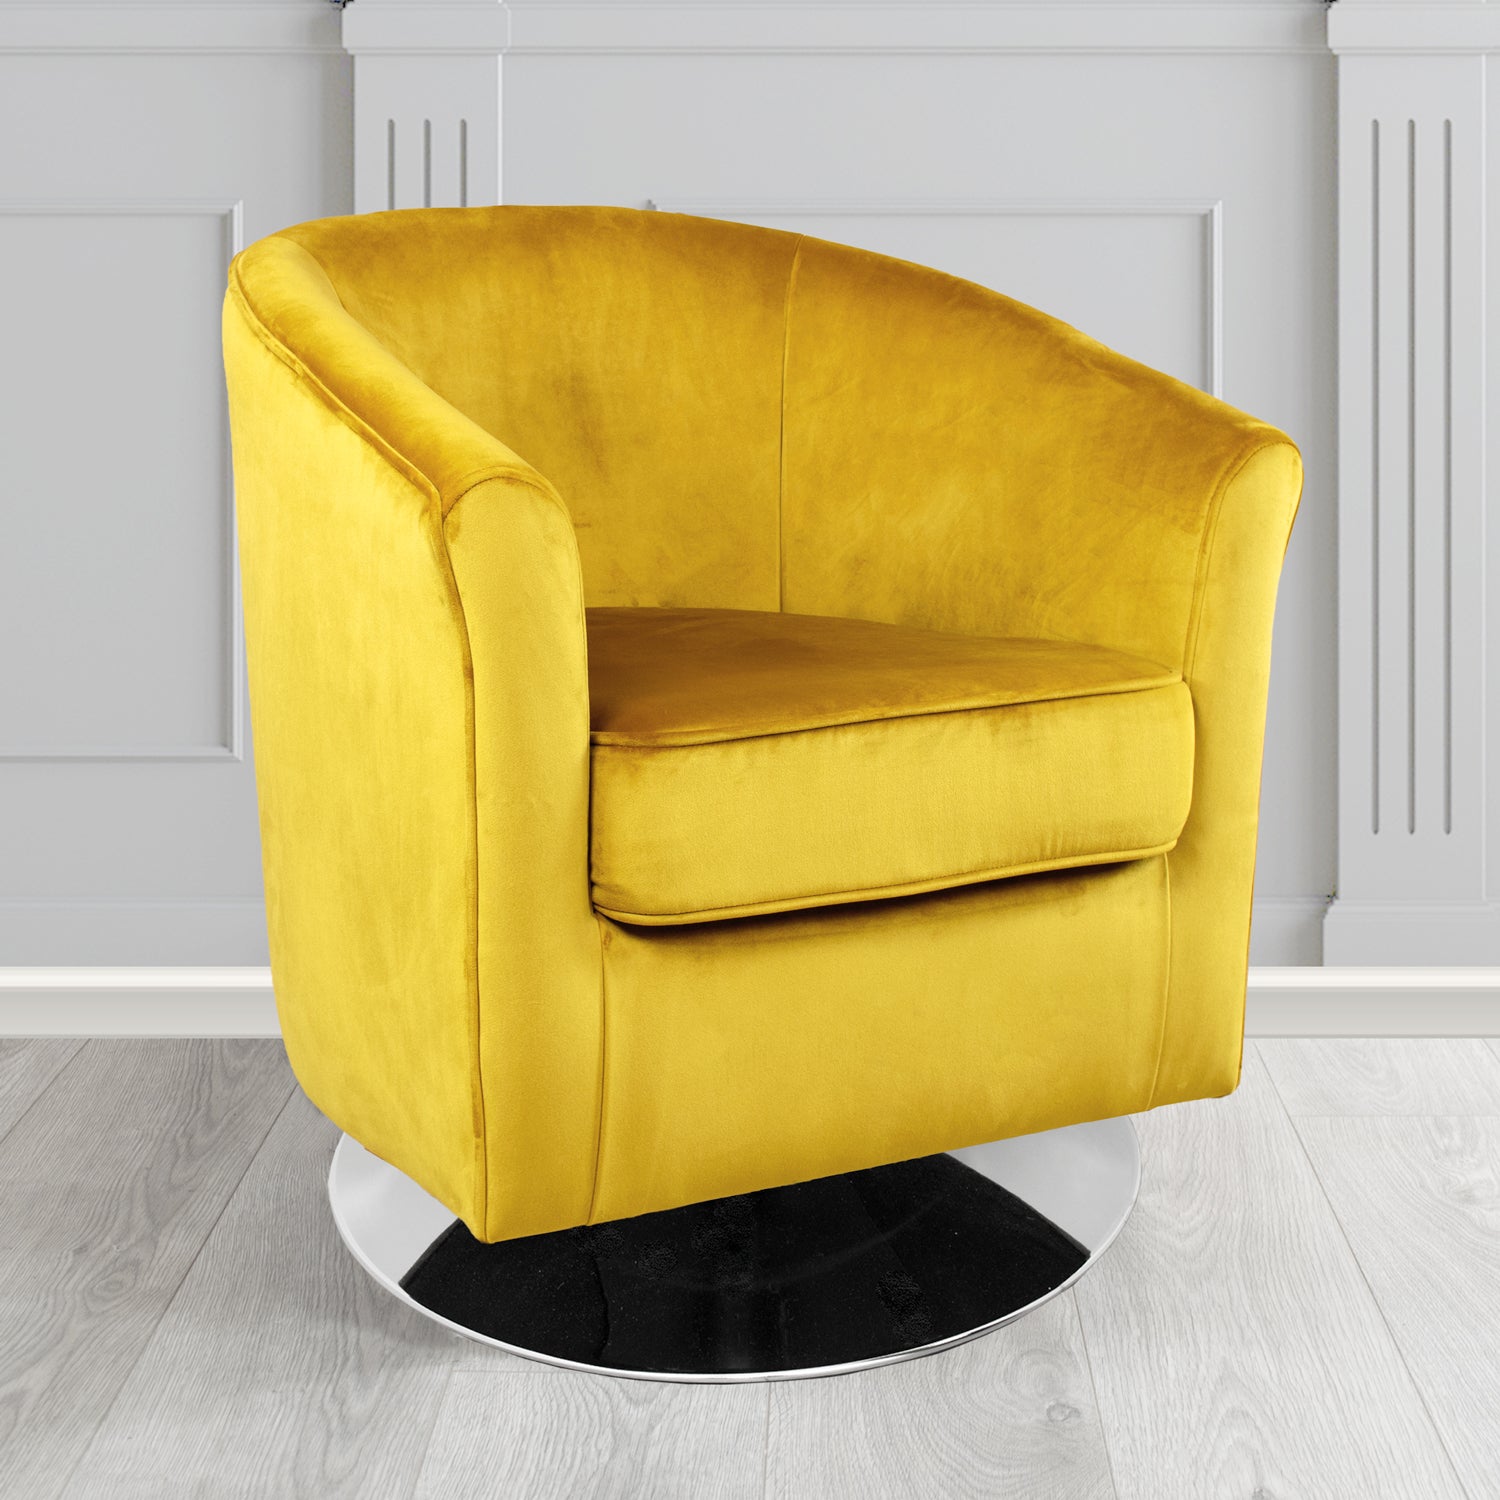 Devon Swivel Tub Chair in Monaco Lemon Velvet Fabric - The Tub Chair Shop